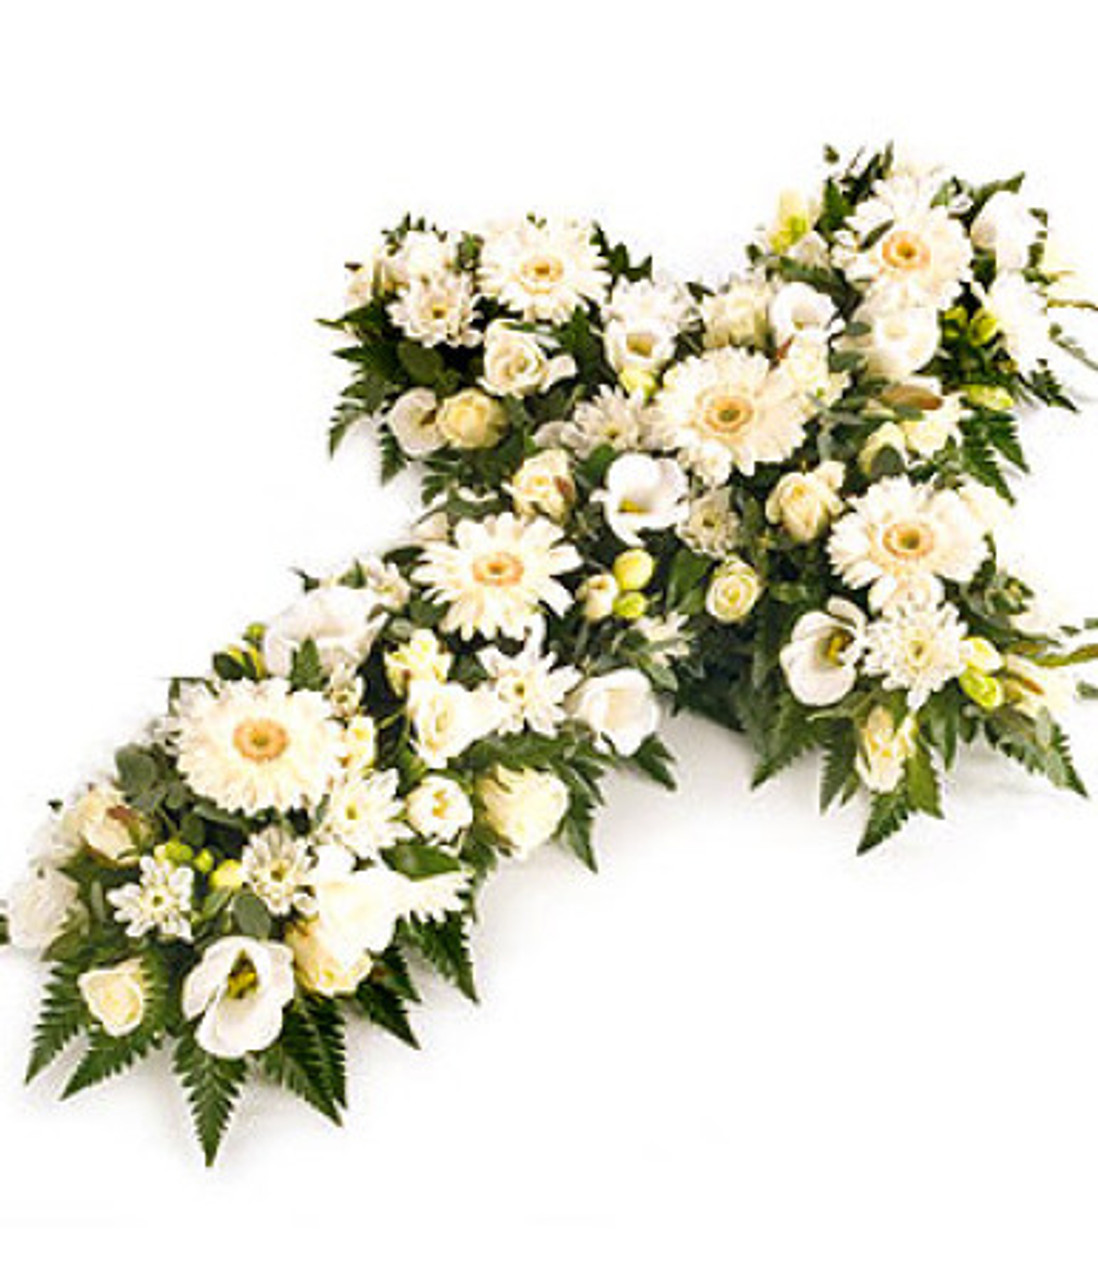 Sympathy Funeral Coffin Top Premium Cross